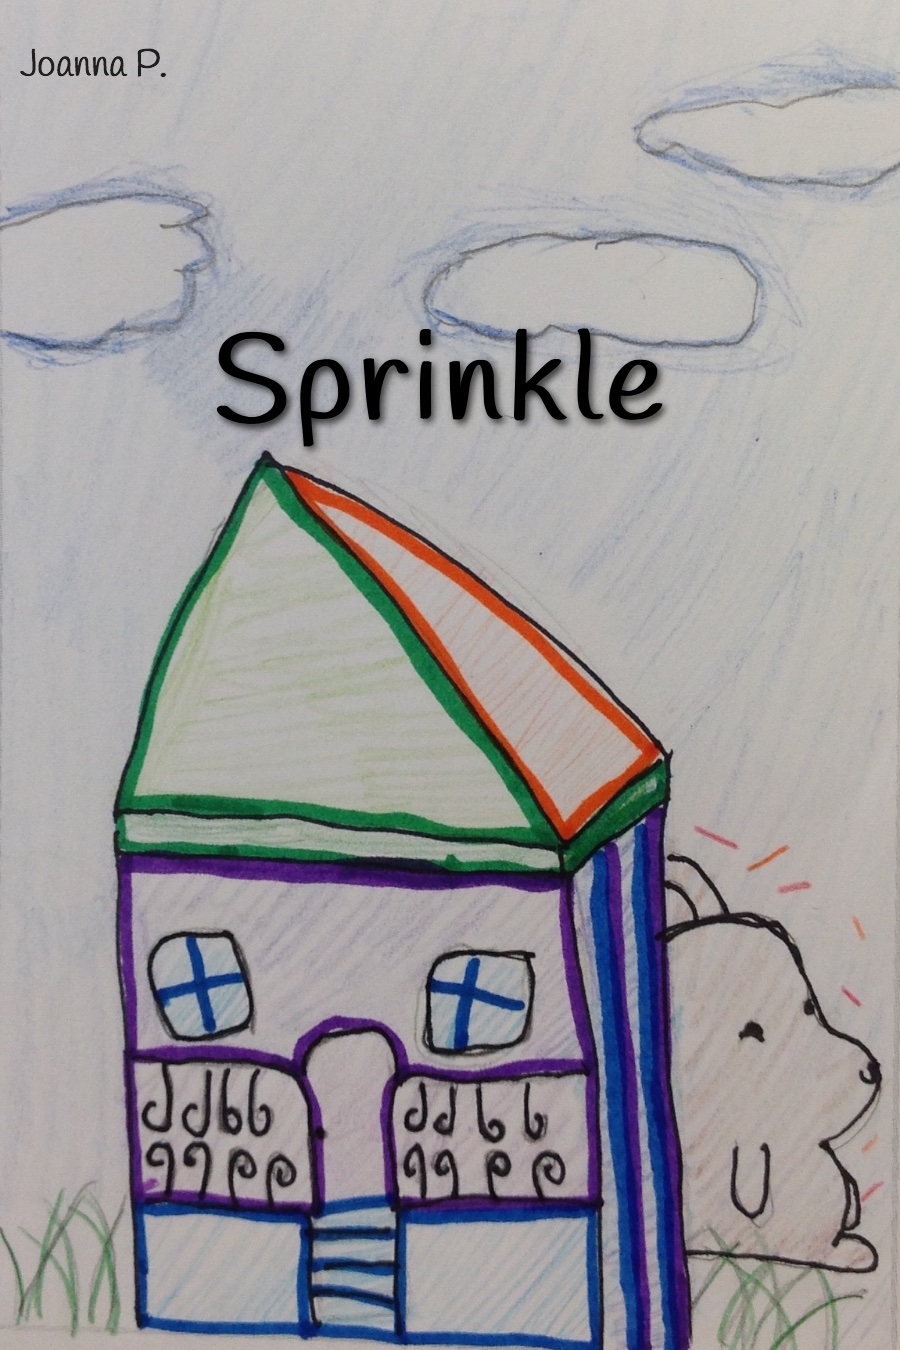 Sprinkle by Joanna P